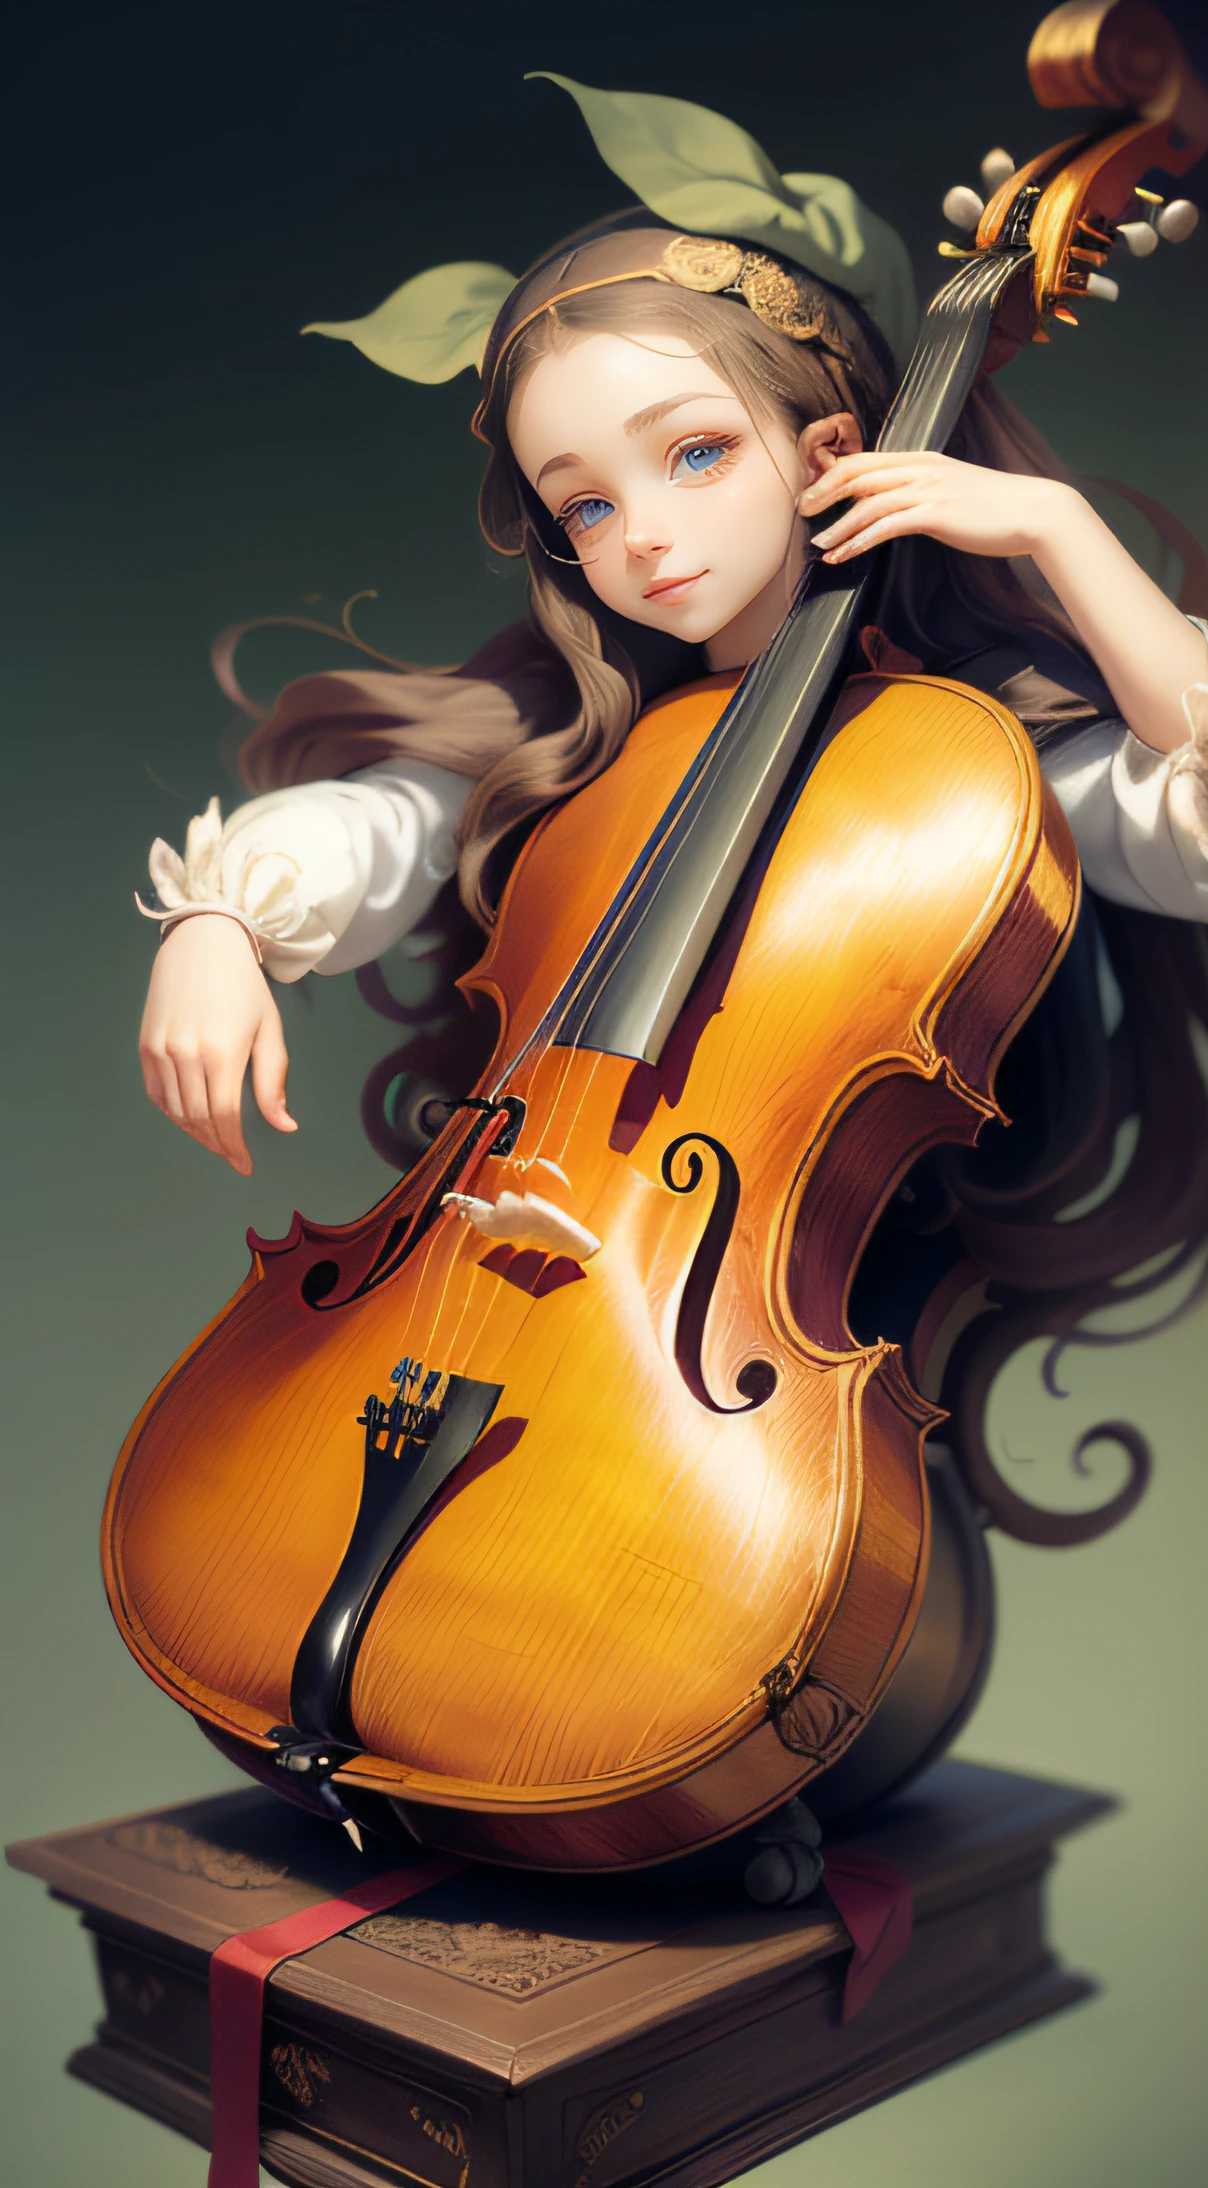 ☆ Studio Ghibli Cello Collection - YouTube